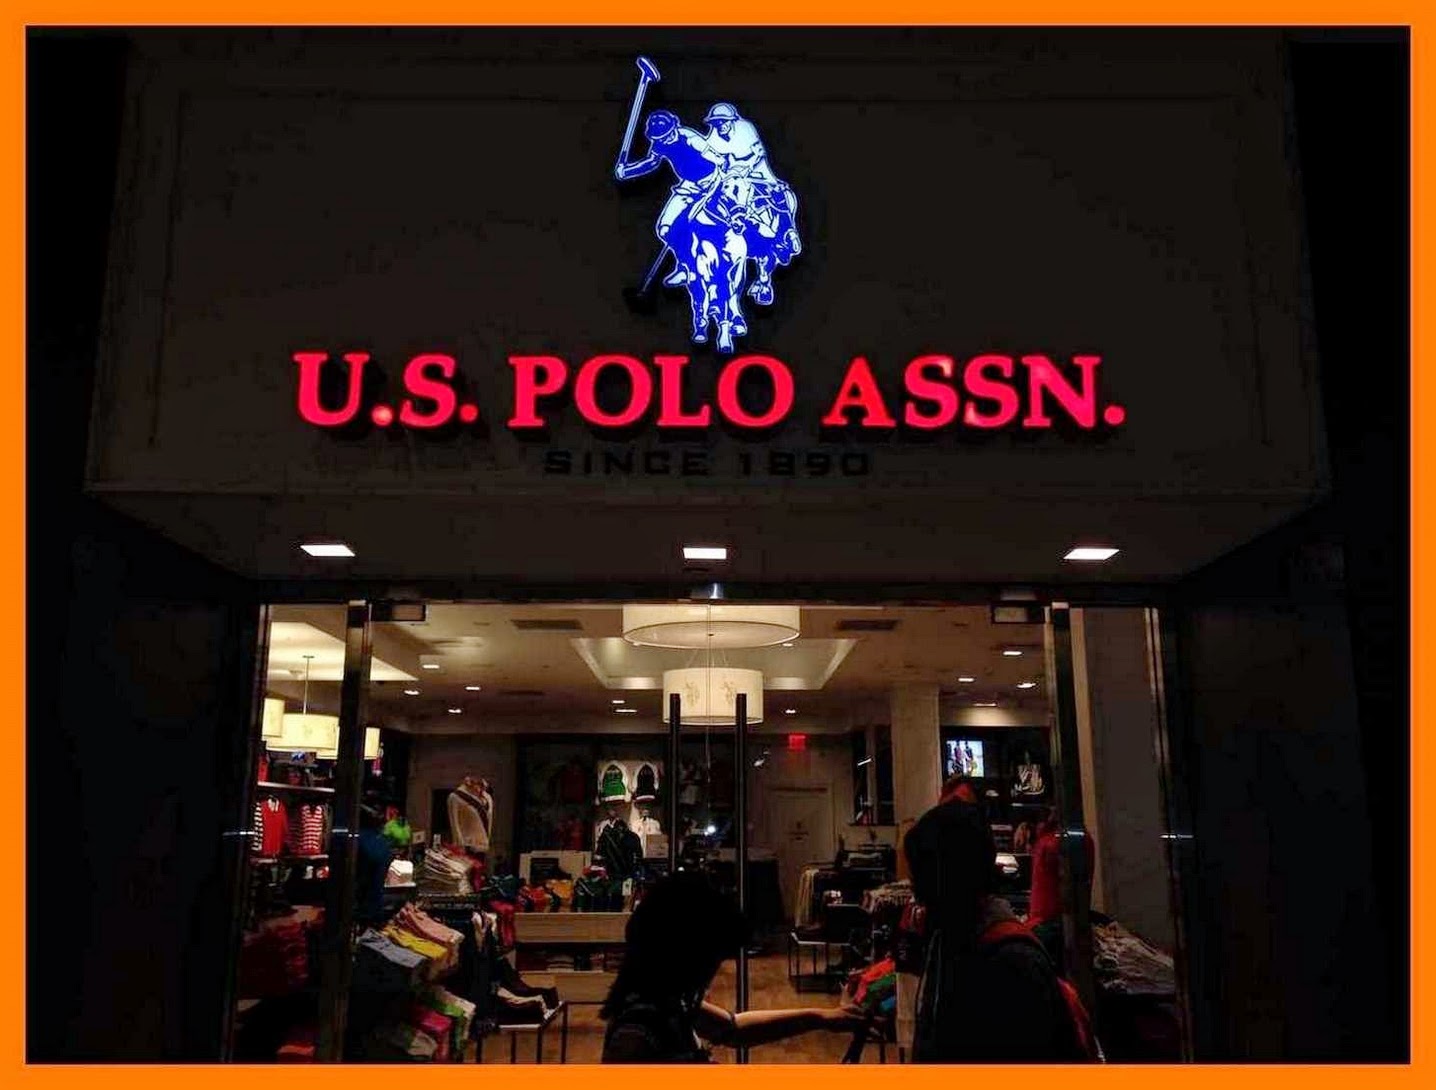 US Polo Association